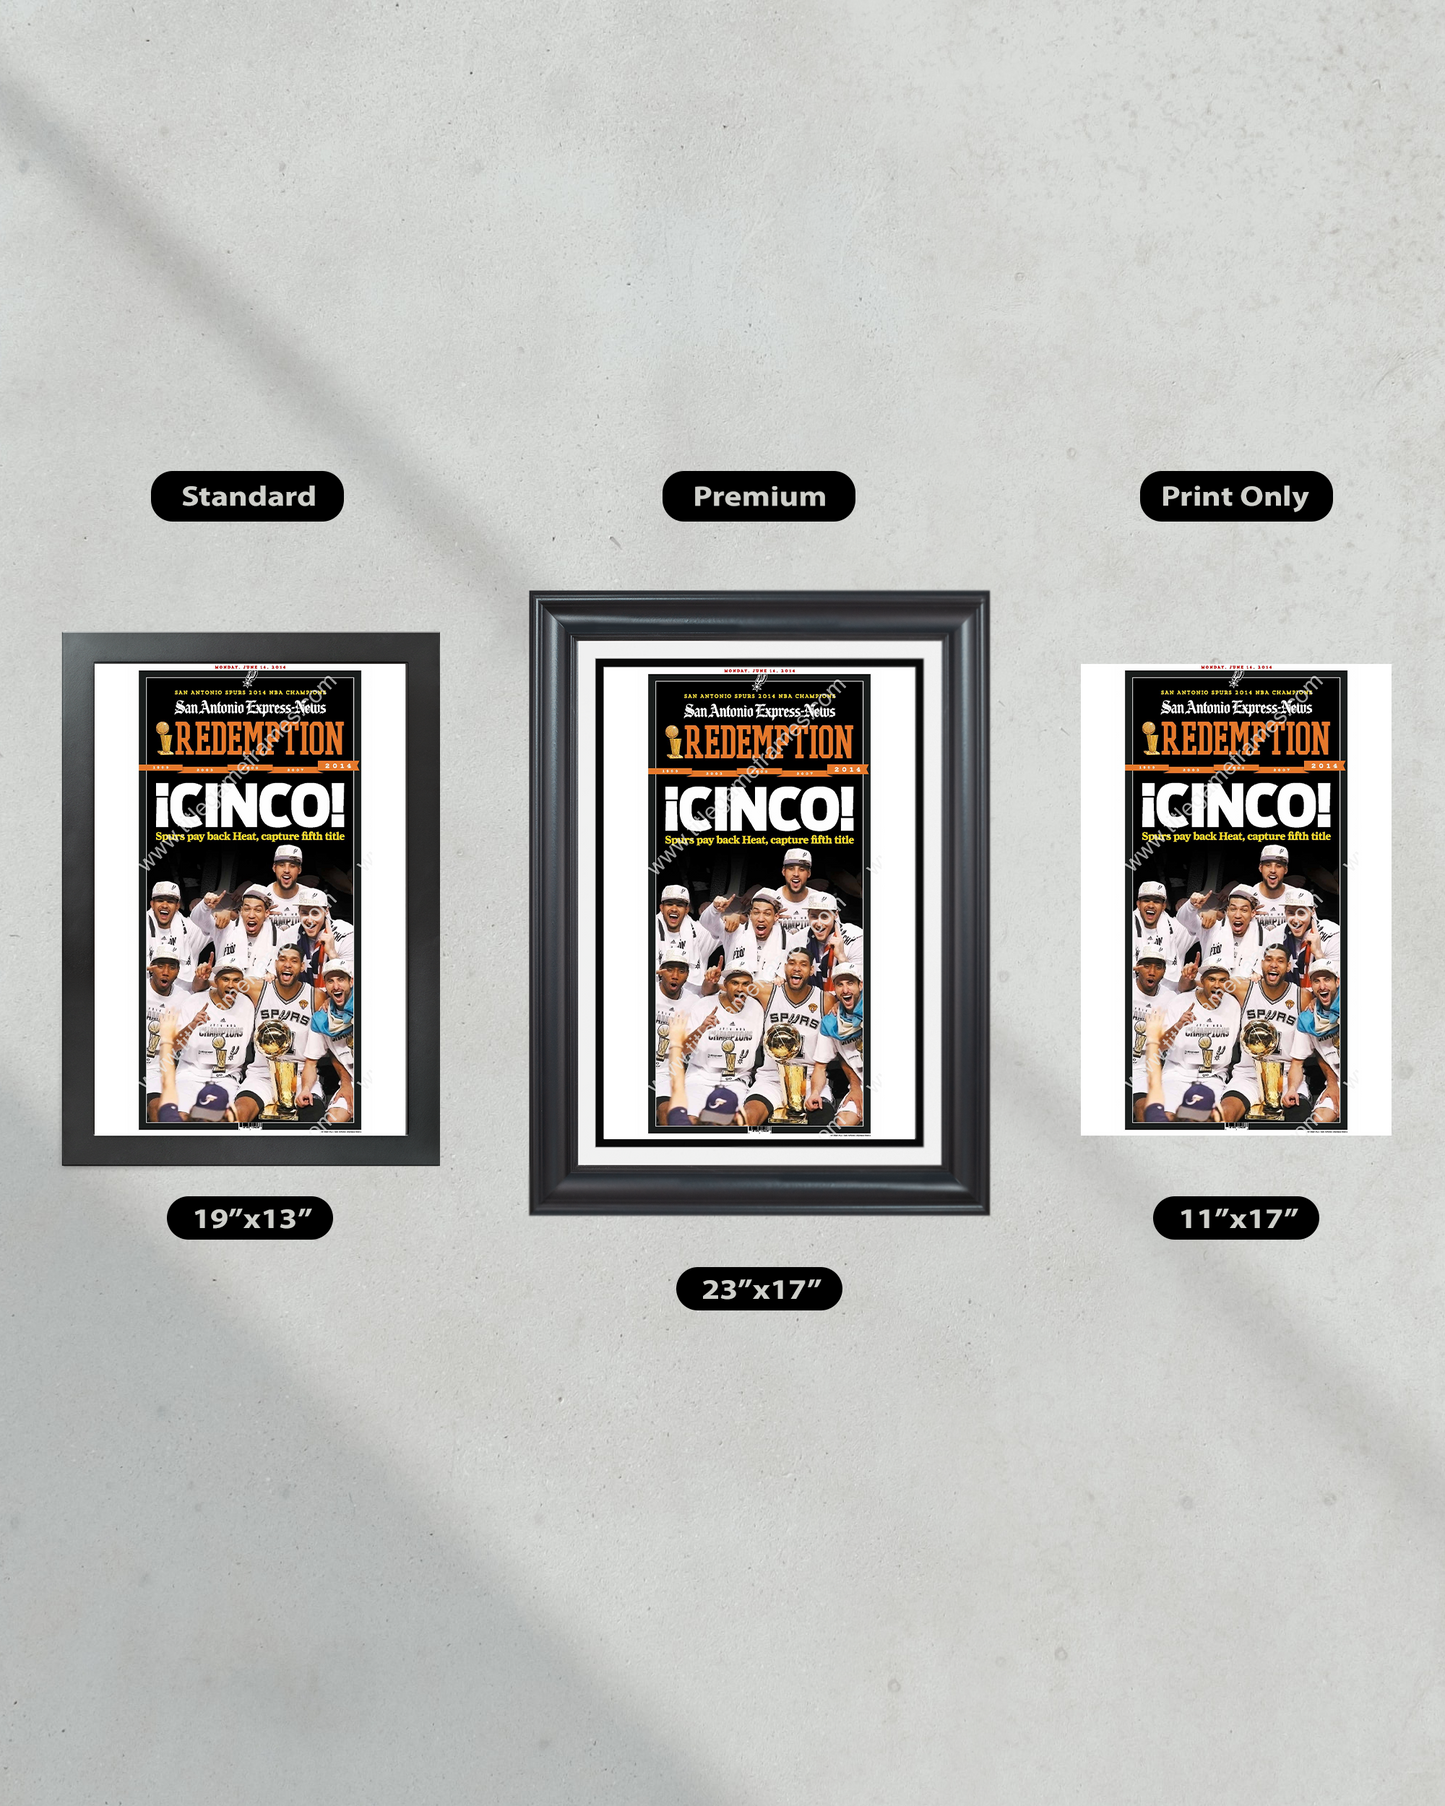 2014 San Antonio Spurs NBA Champion Framed Newspaper Front Page Print - Title Game Frames